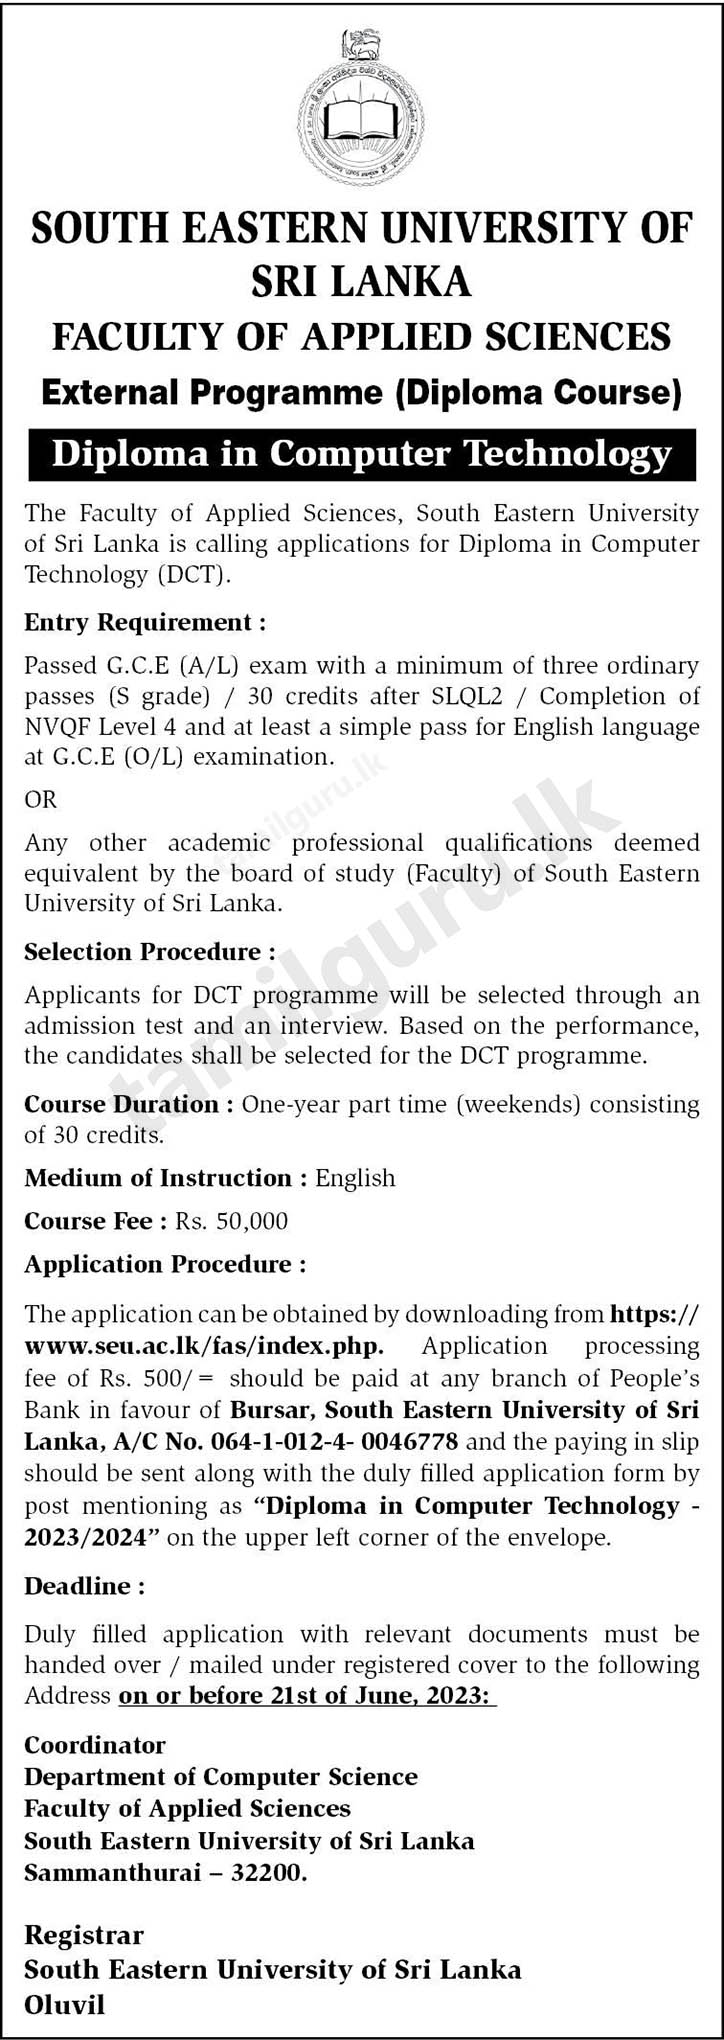 Diploma in Computer Technology 2023 - South Eastern University of Sri Lanka (SEUSL)